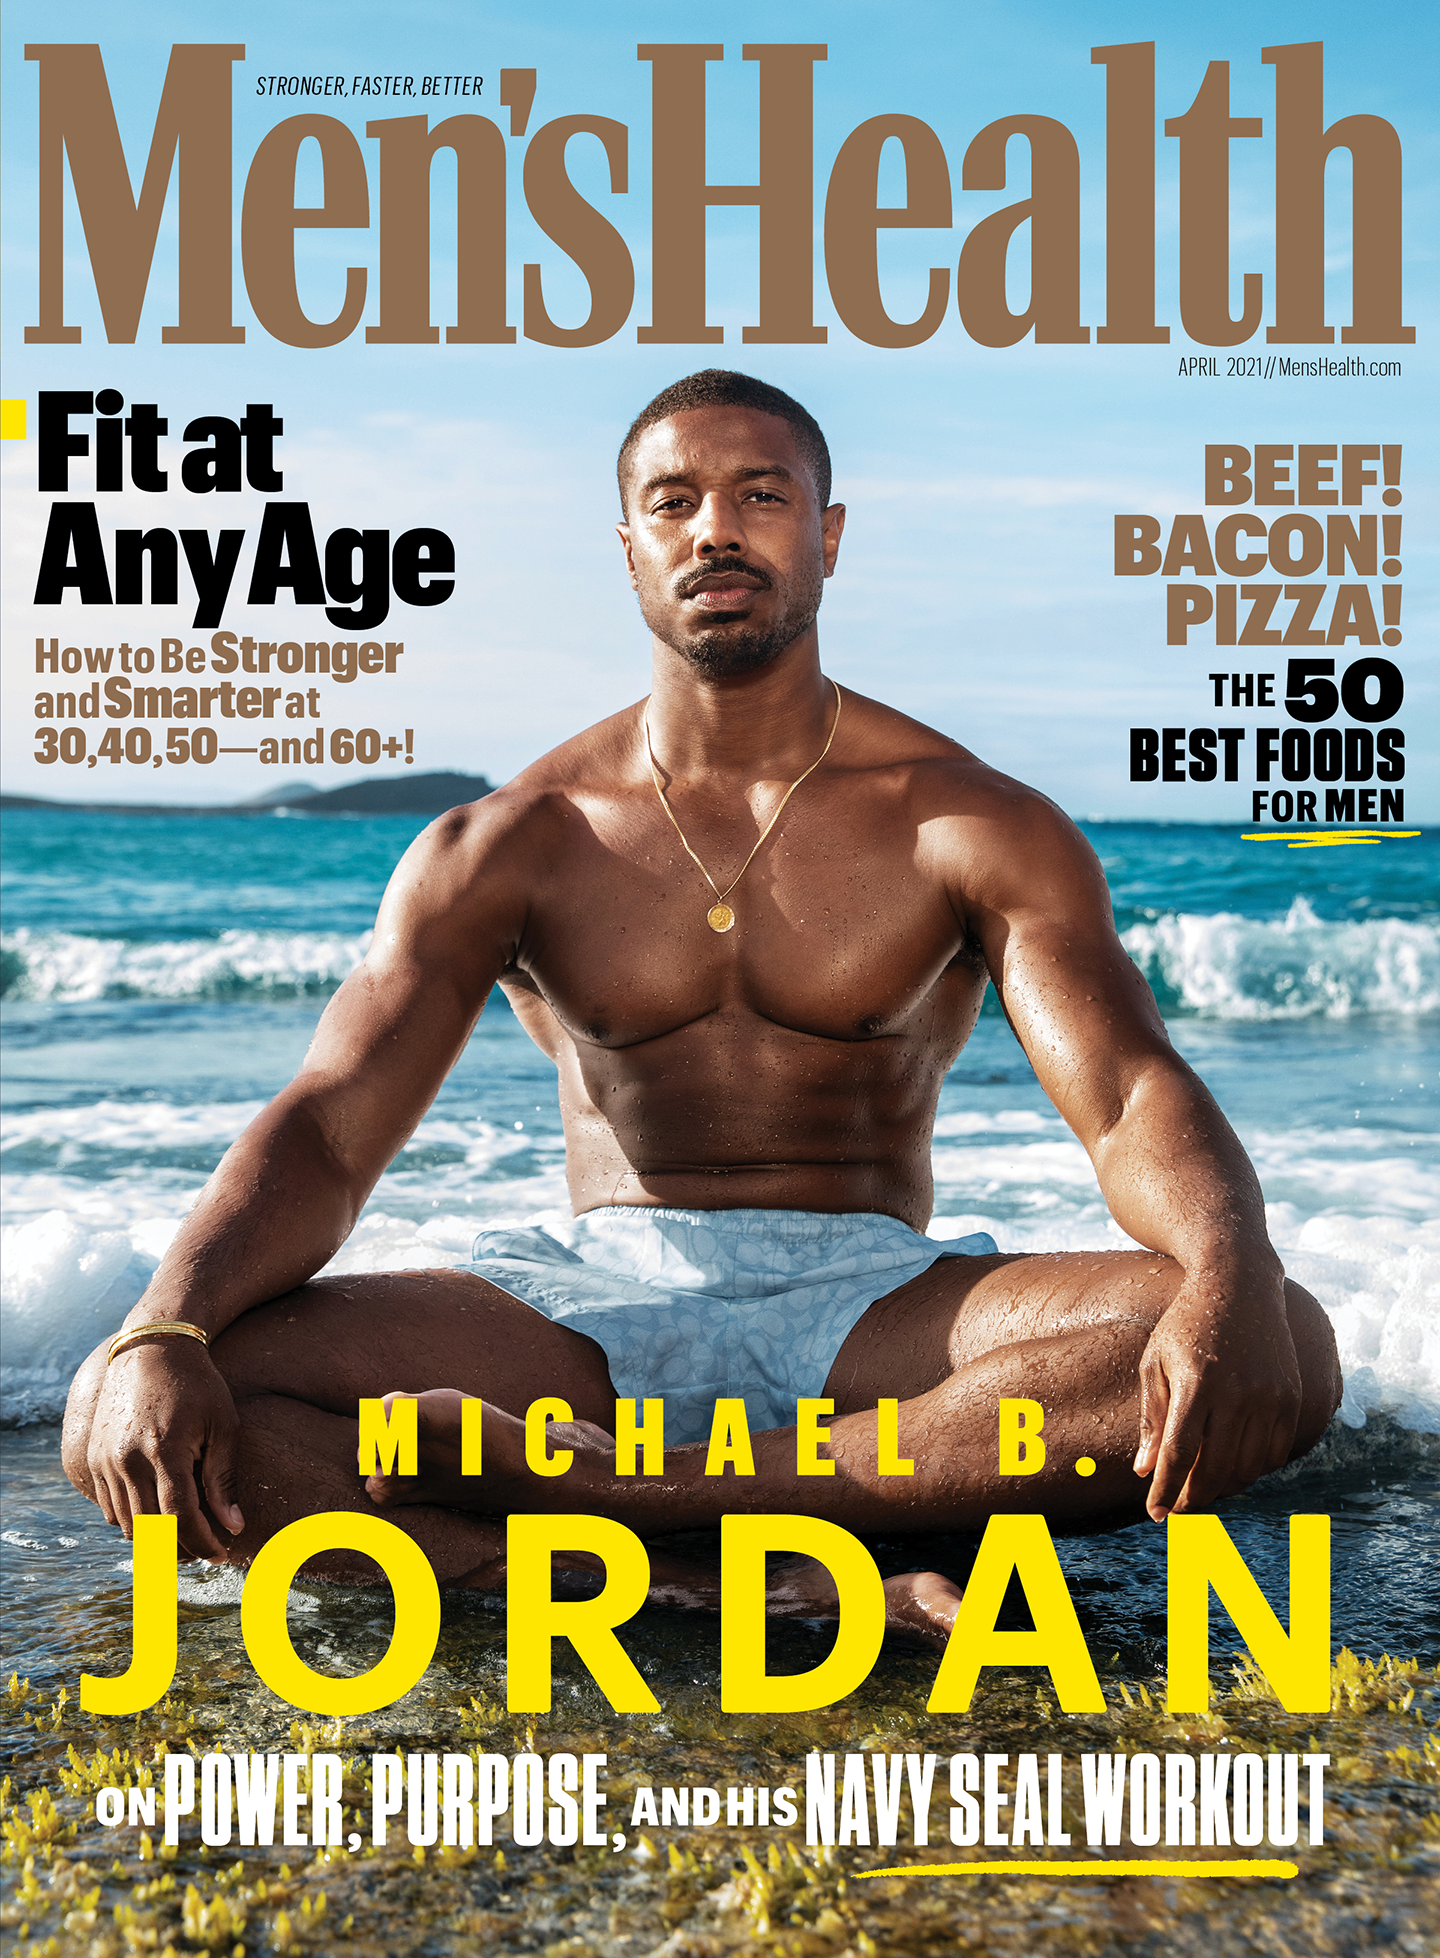 It's tough being a Black man in America' Michael B. Jordan on